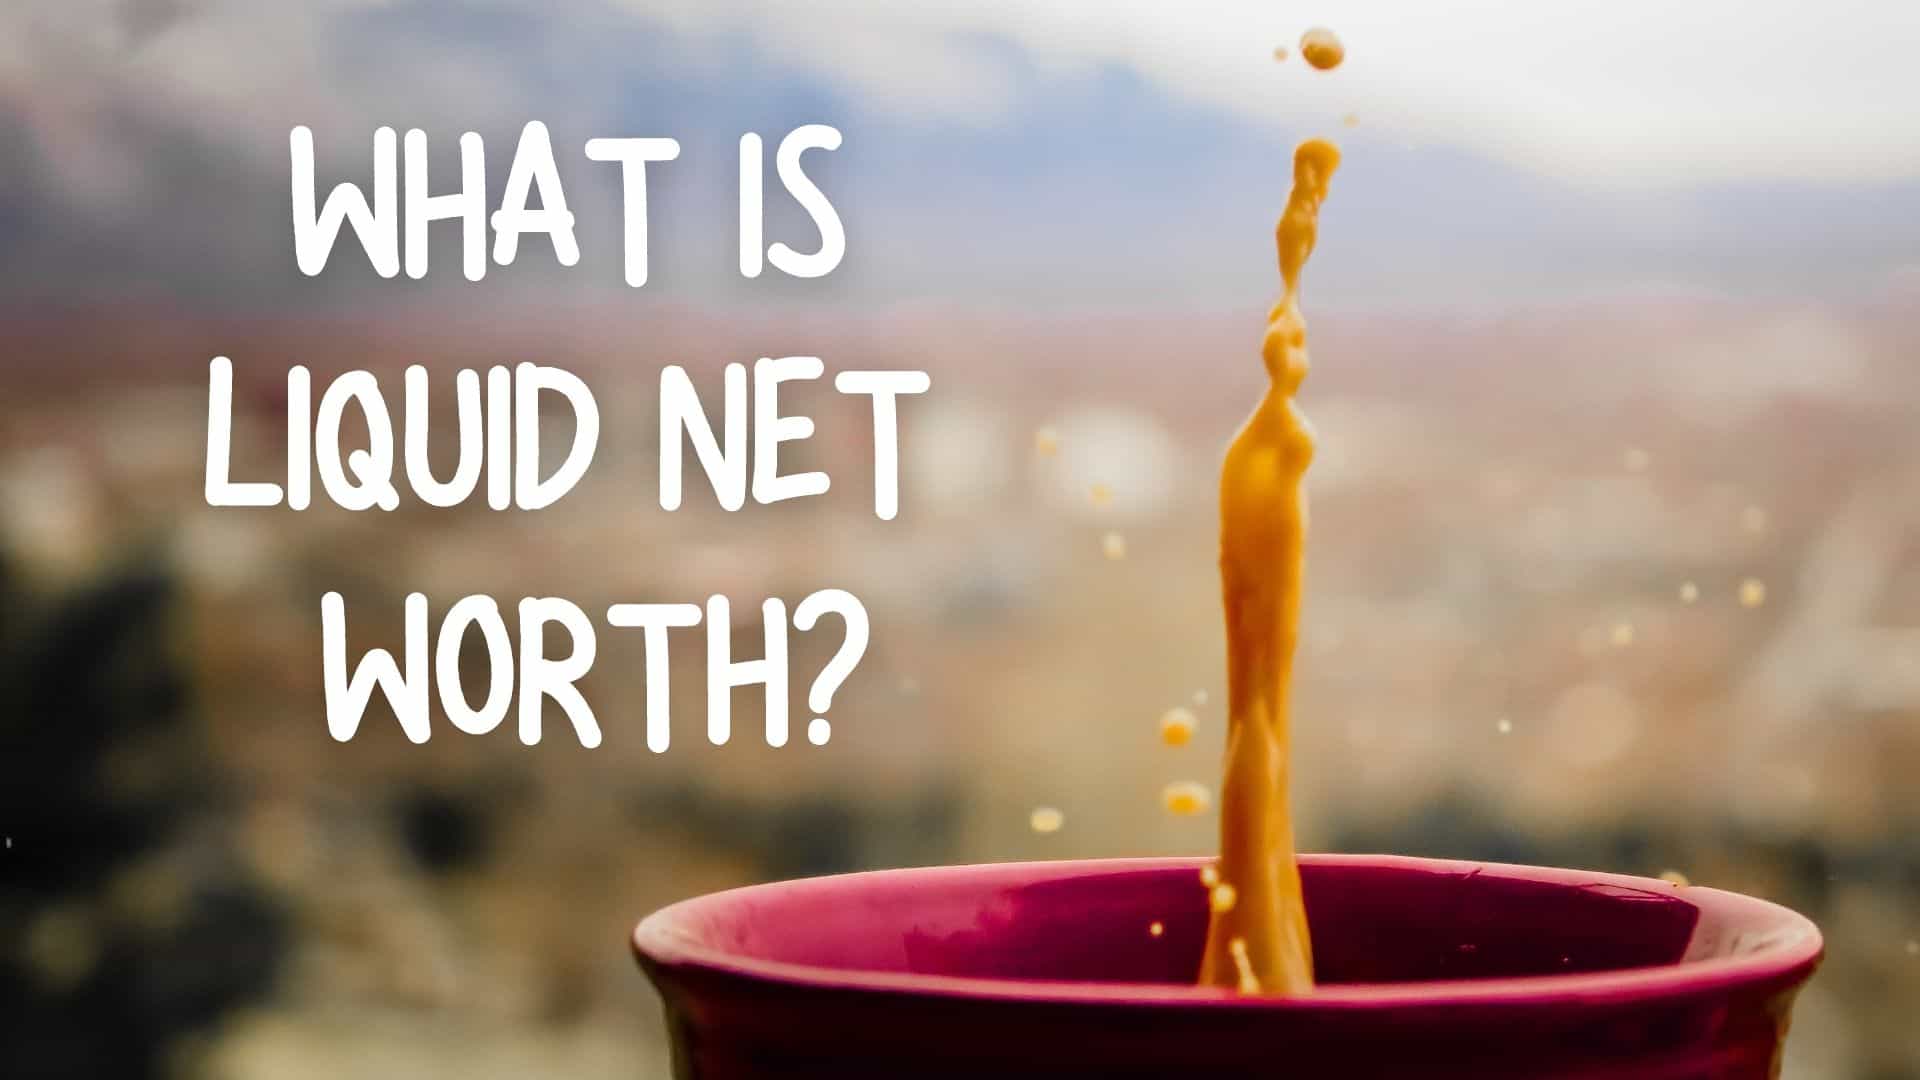 What is Liquid Net Worth?